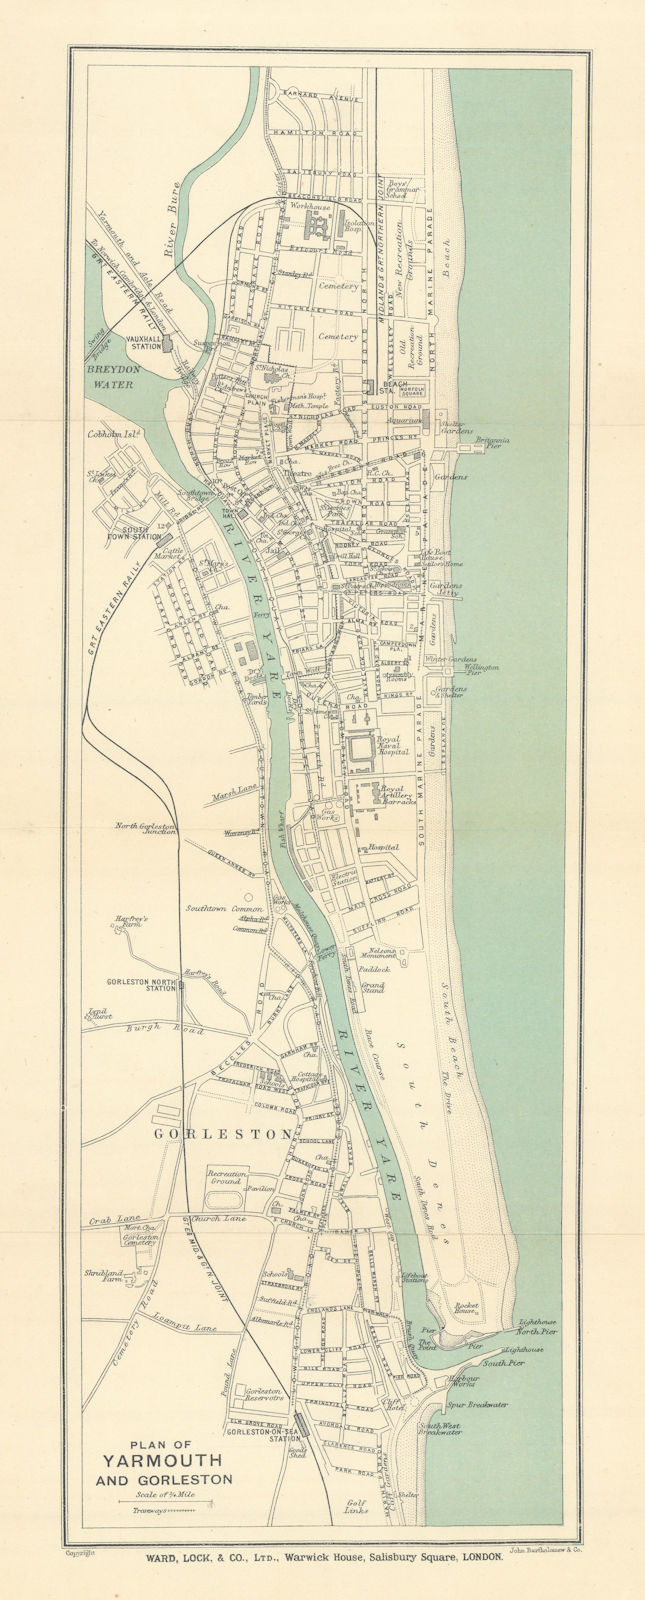 Associate Product YARMOUTH & GORLESTON vintage tourist town city plan. Norfolk. WARD LOCK 1909 map